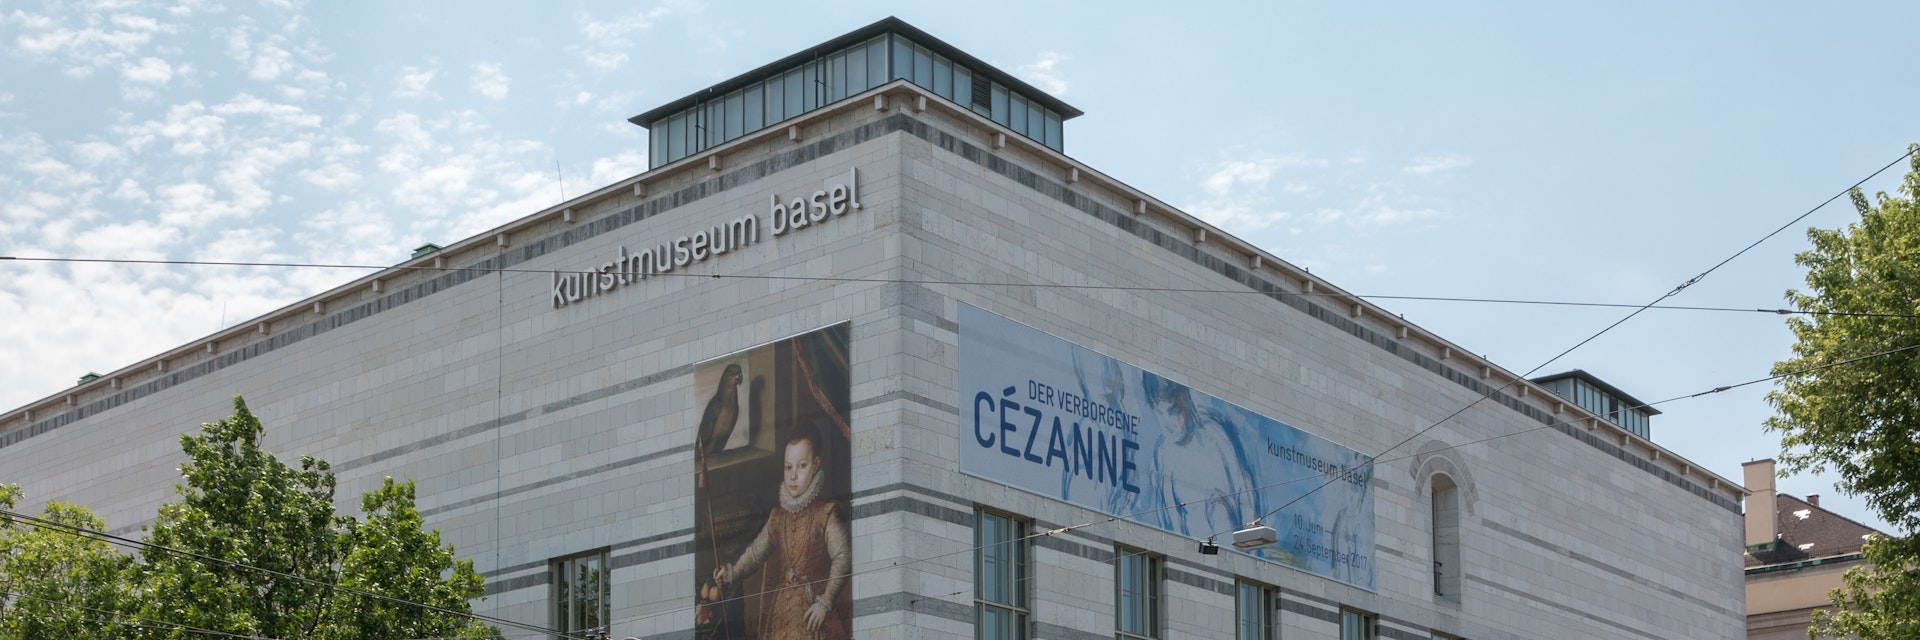 Kunstmuseum Basel in Basel, Switzerland.